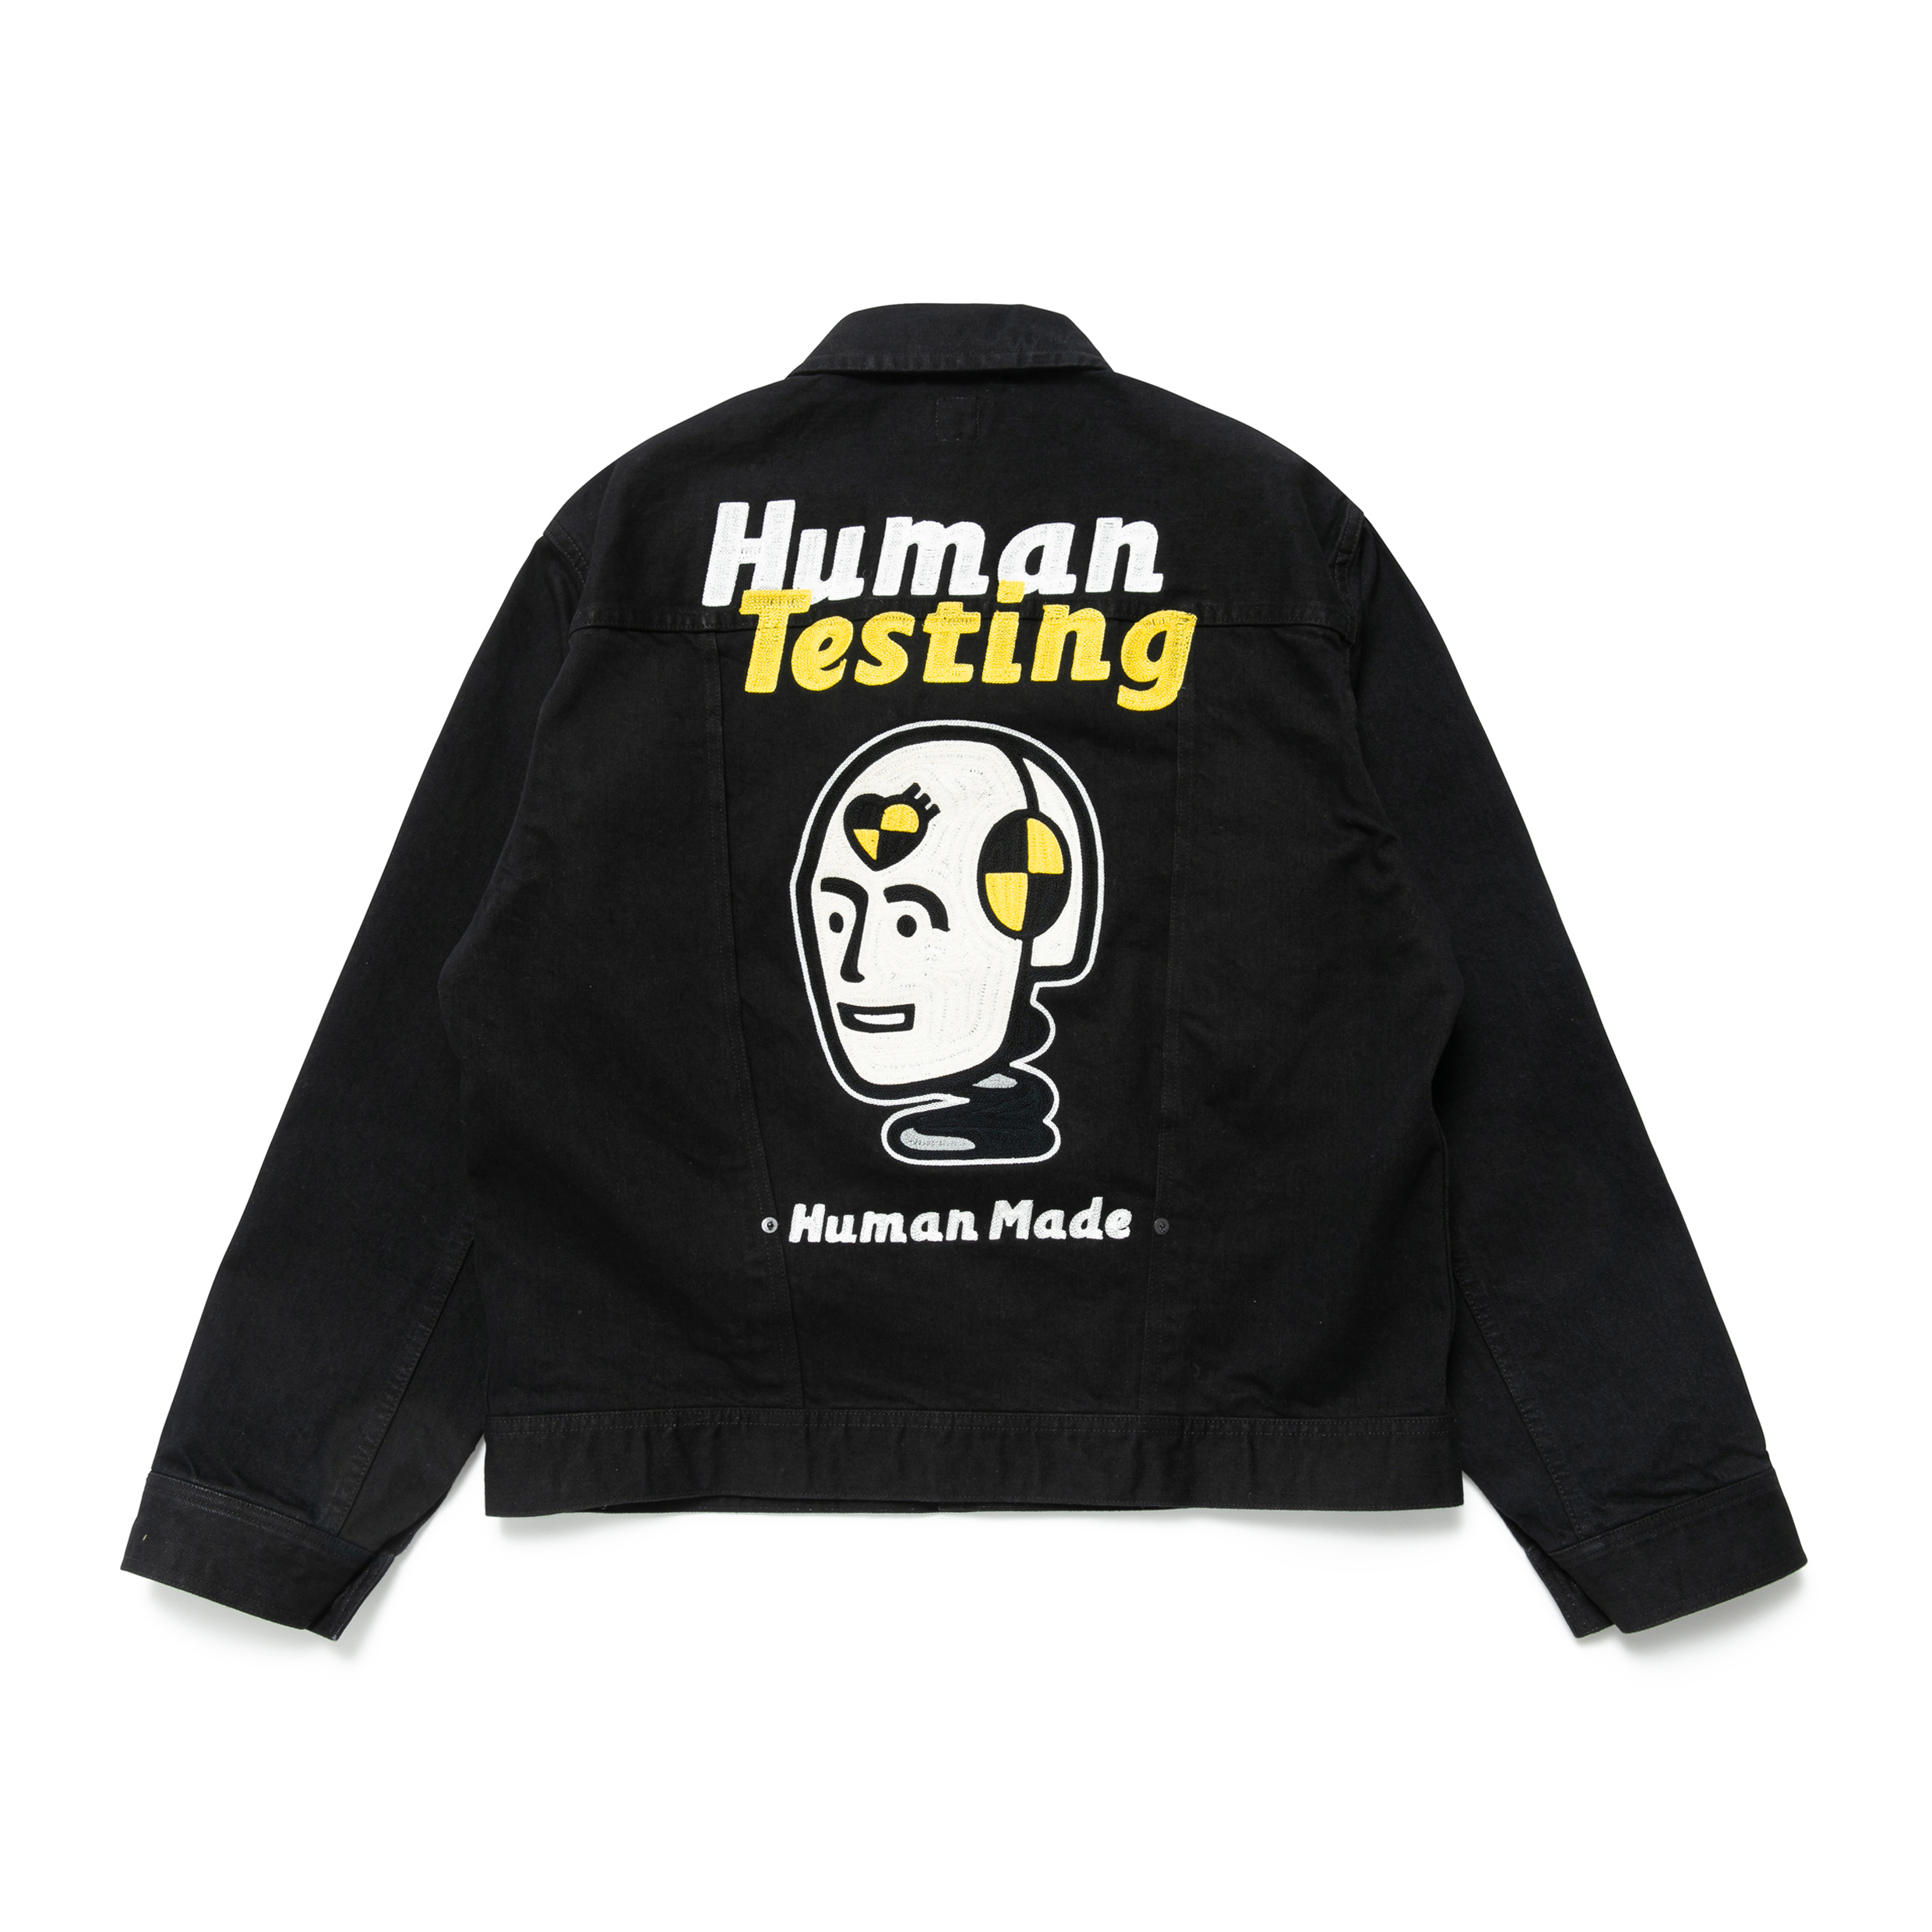 HUMAN MADE x A$AP Rocky “HUMAN TESTING” コレクション発売のお知らせ 